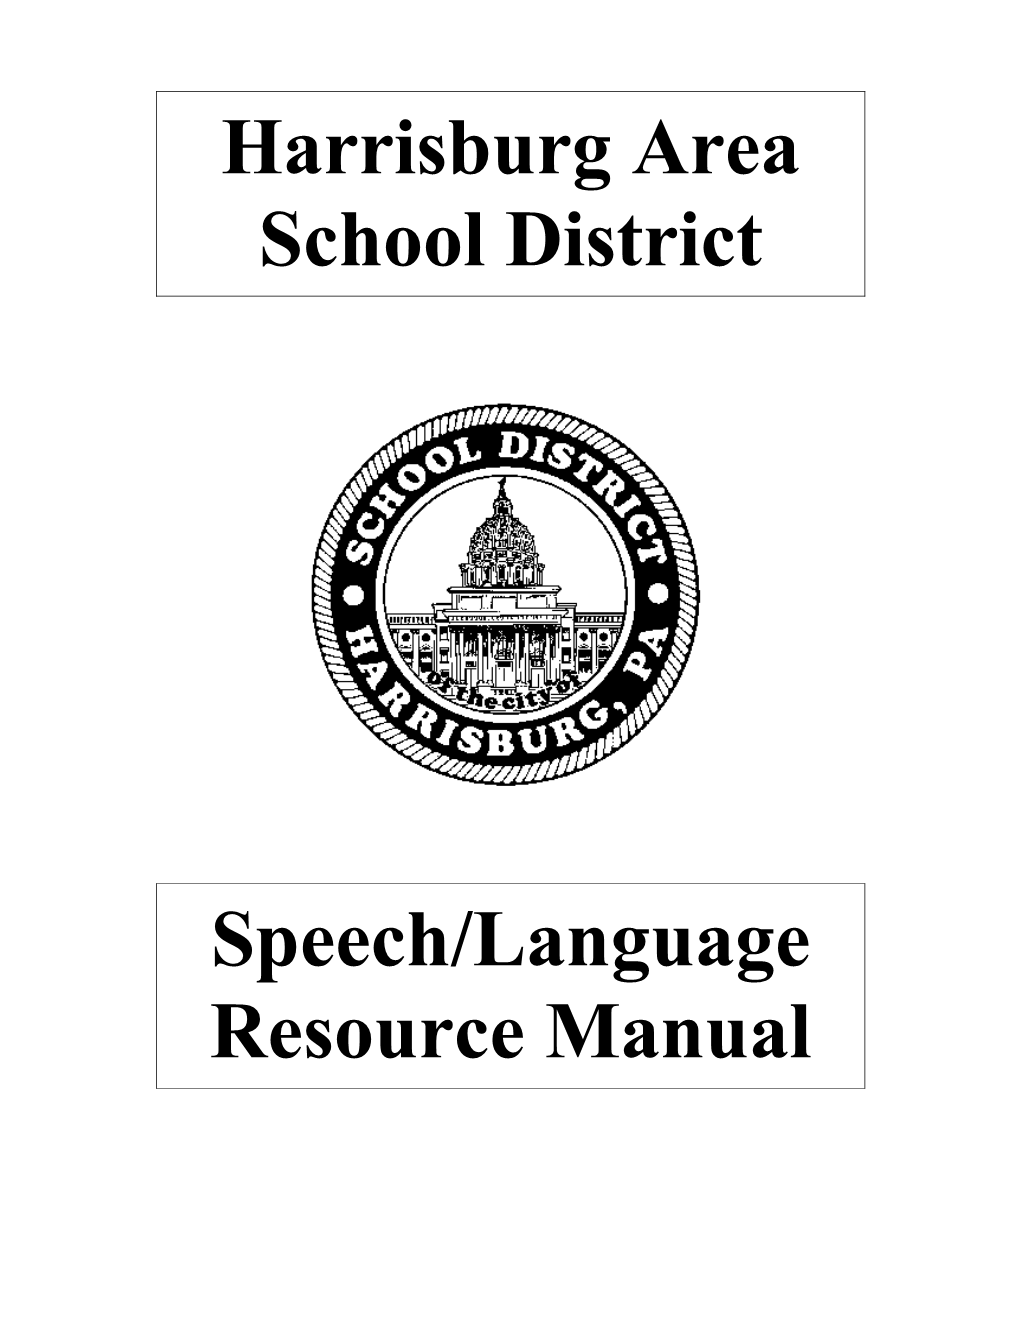 Eligibility Criteria for Speech/Language Impaired Services 3